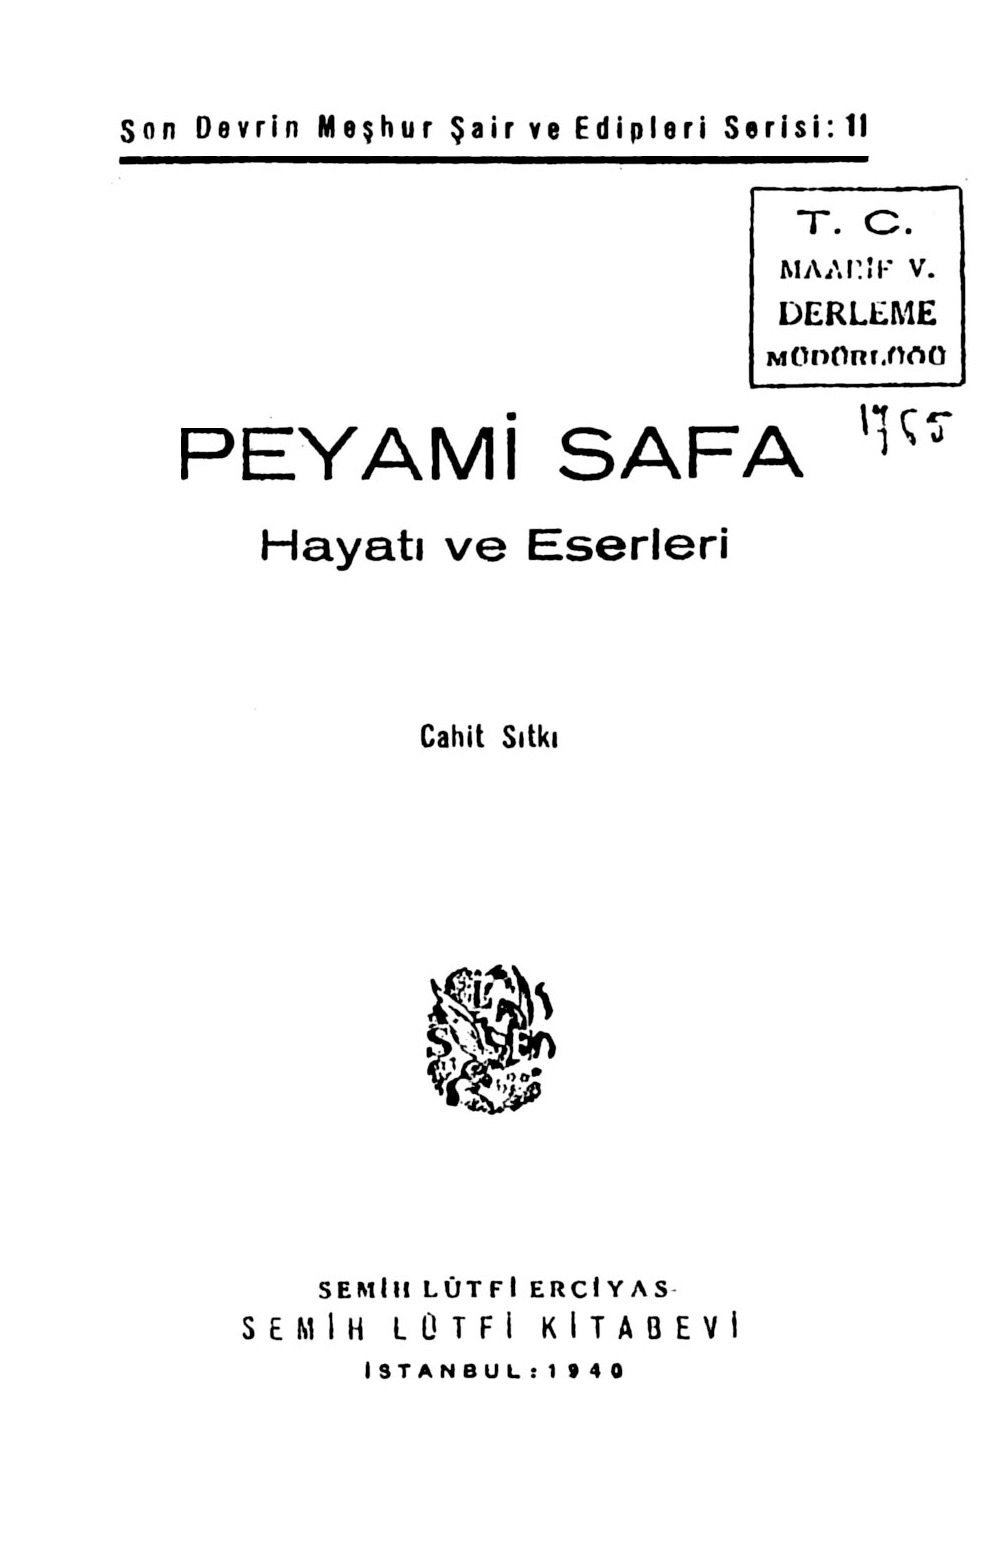 Peyami Sefa-Hayati Ve Eserleri-Cahid Sidqi-1940-22s